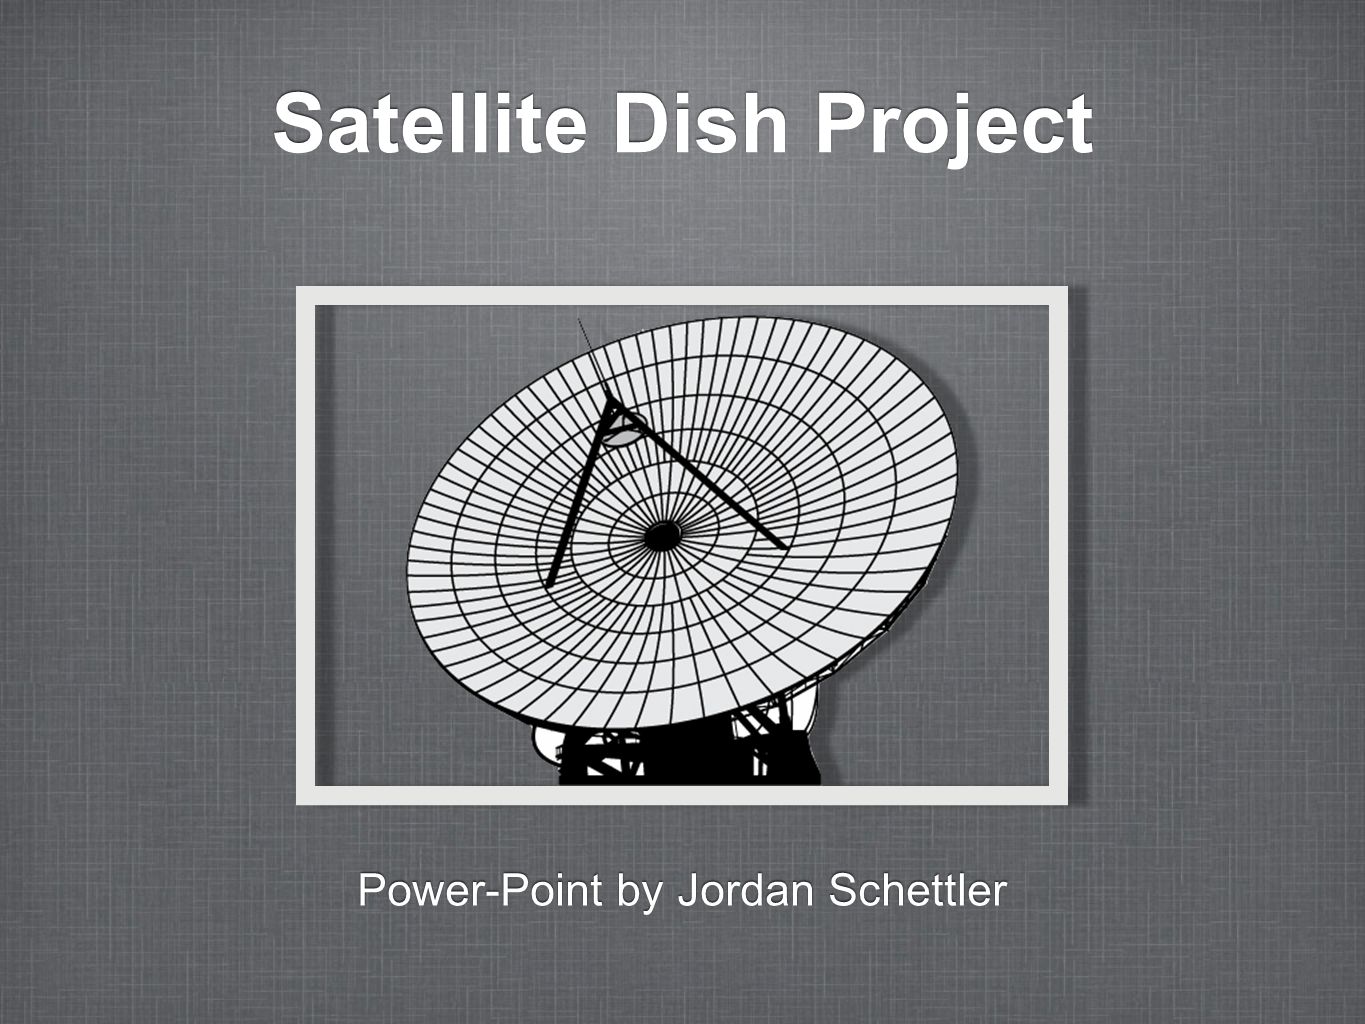 Satellite Dish Project Power-Point by Jordan Schettler